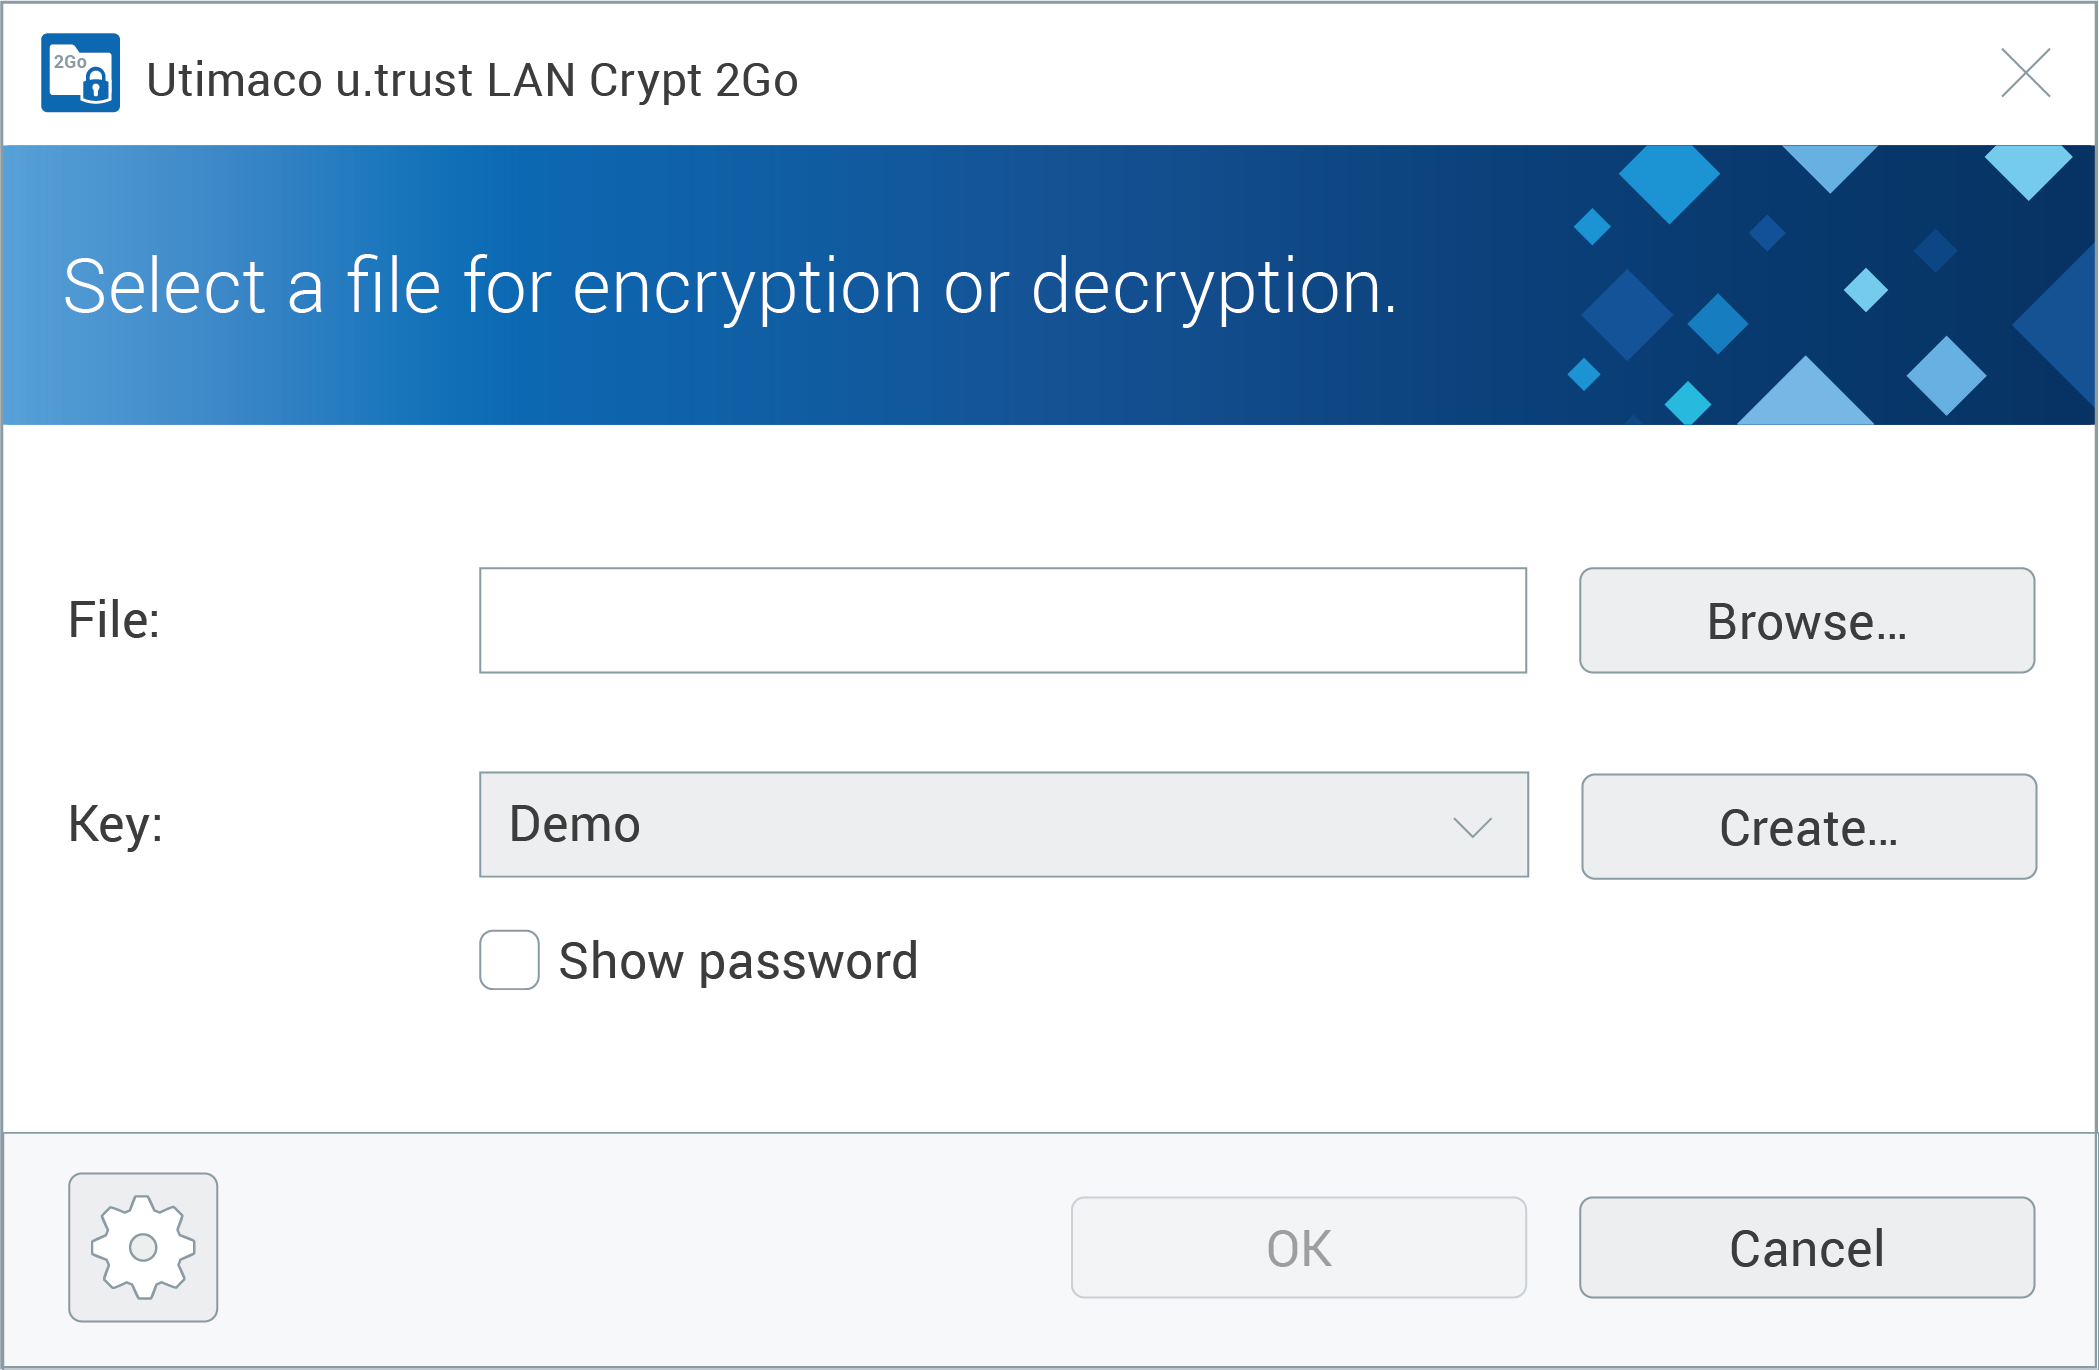 u.trust LAN Crypt 2Go Example